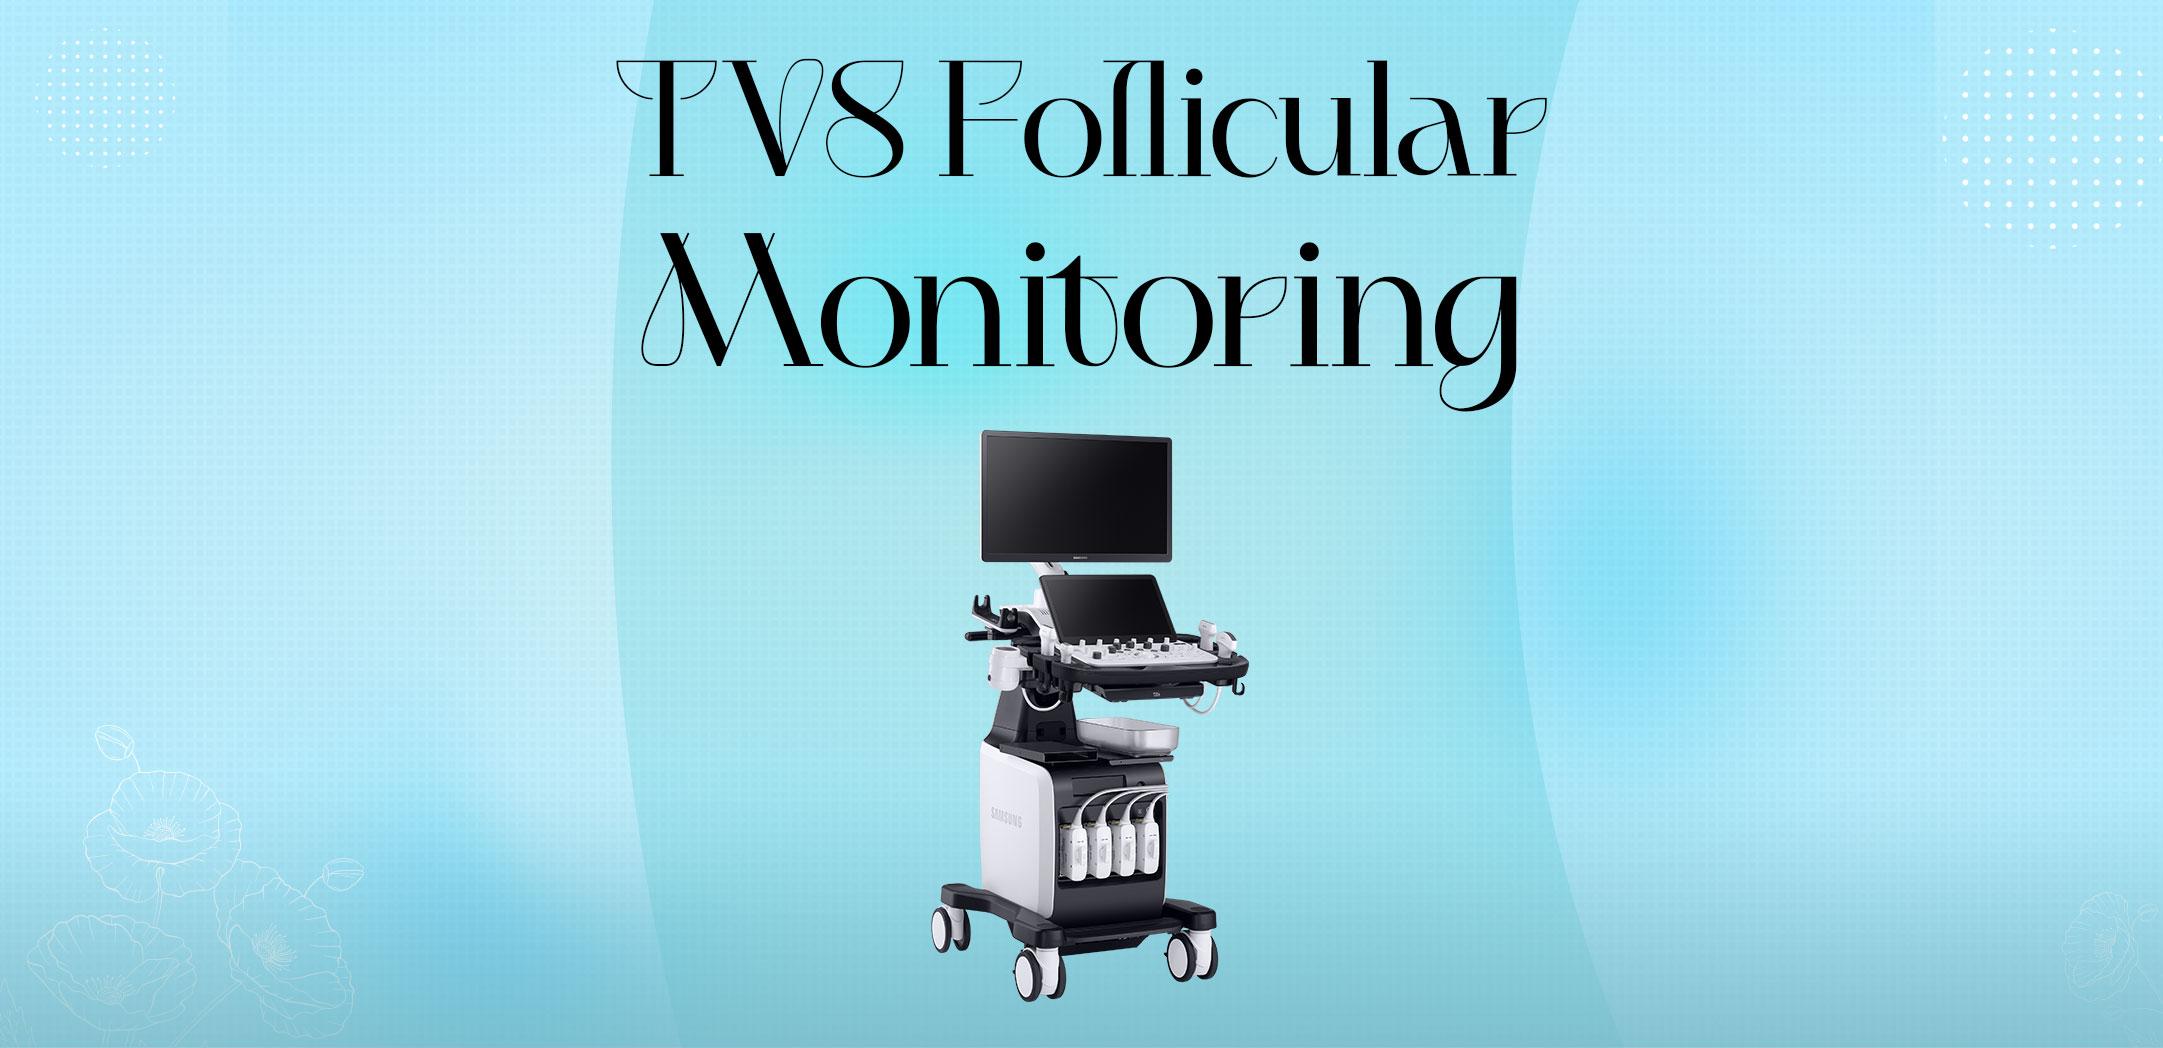 TVS Follicular Monitoring